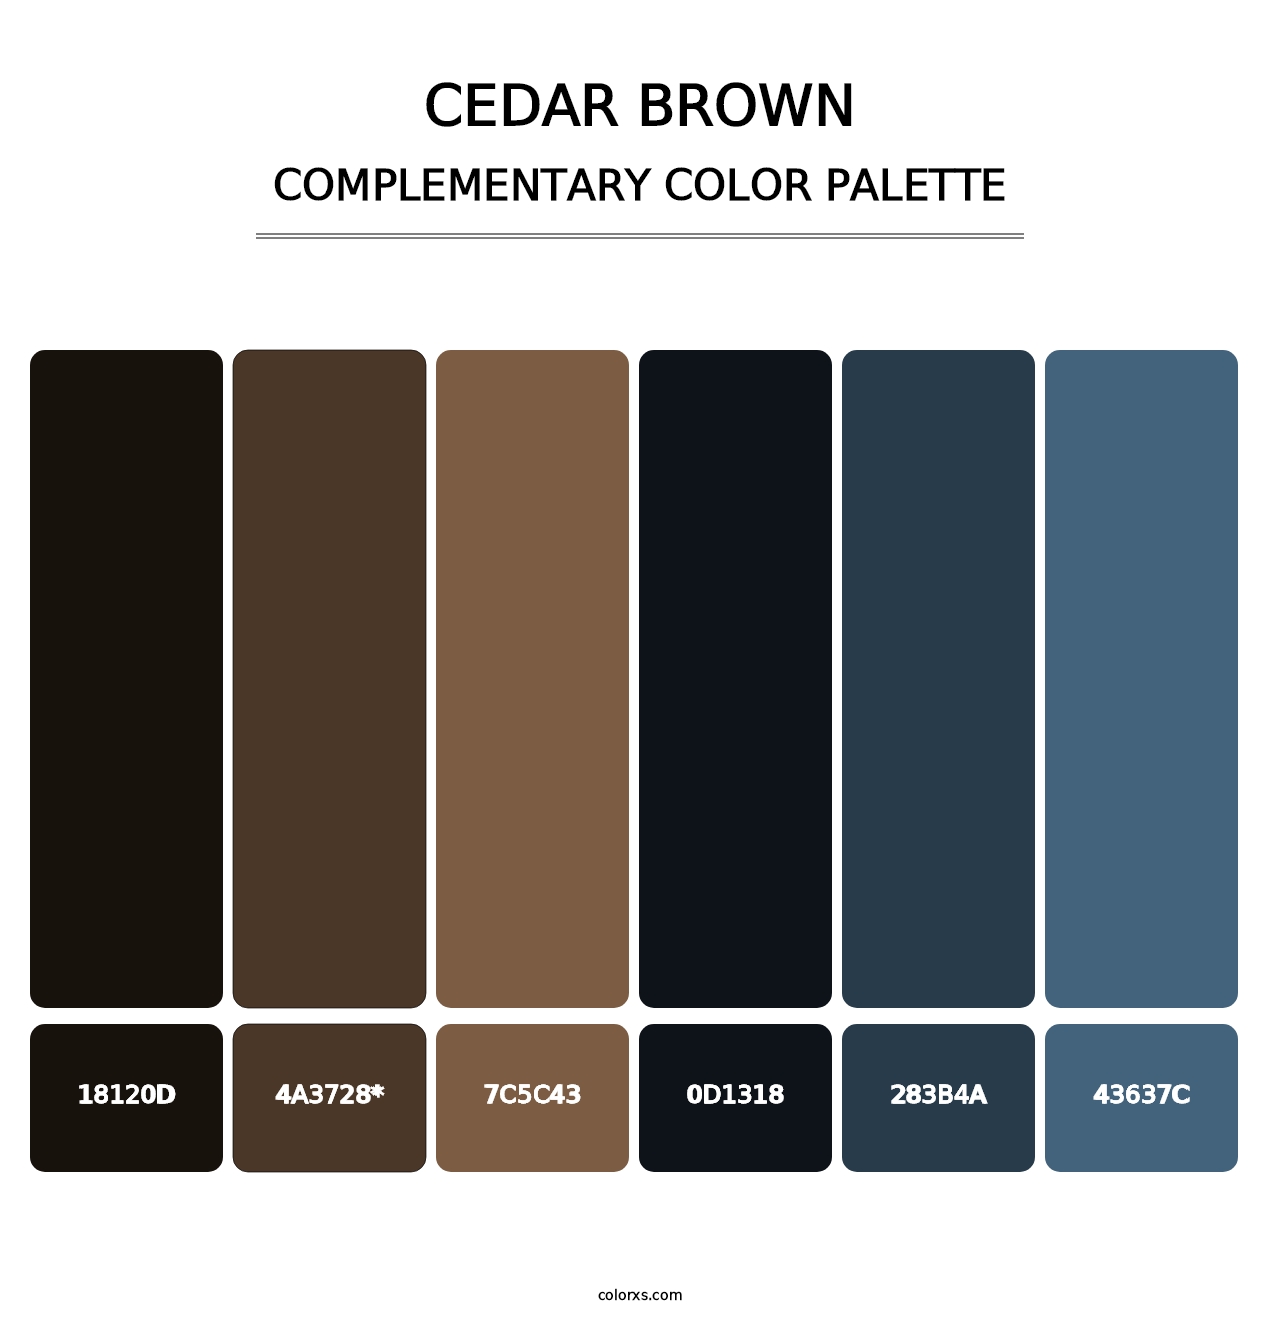 Cedar Brown - Complementary Color Palette